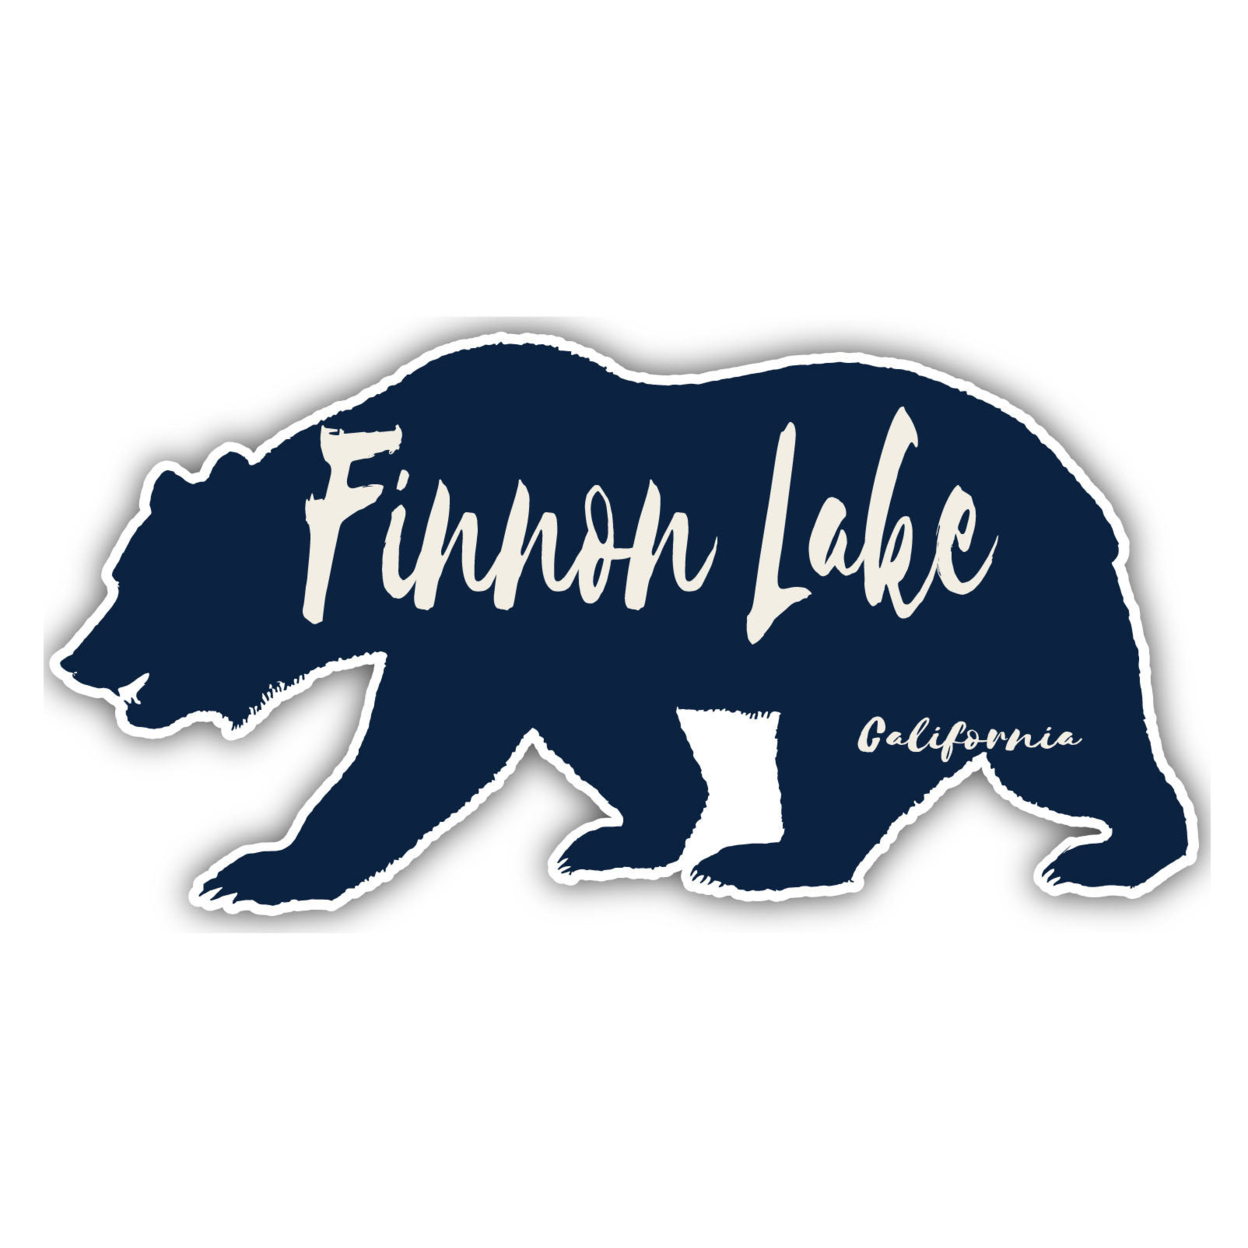 Finnon Lake California Souvenir Decorative Stickers (Choose Theme And Size) - Single Unit, 8-Inch, Camp Life